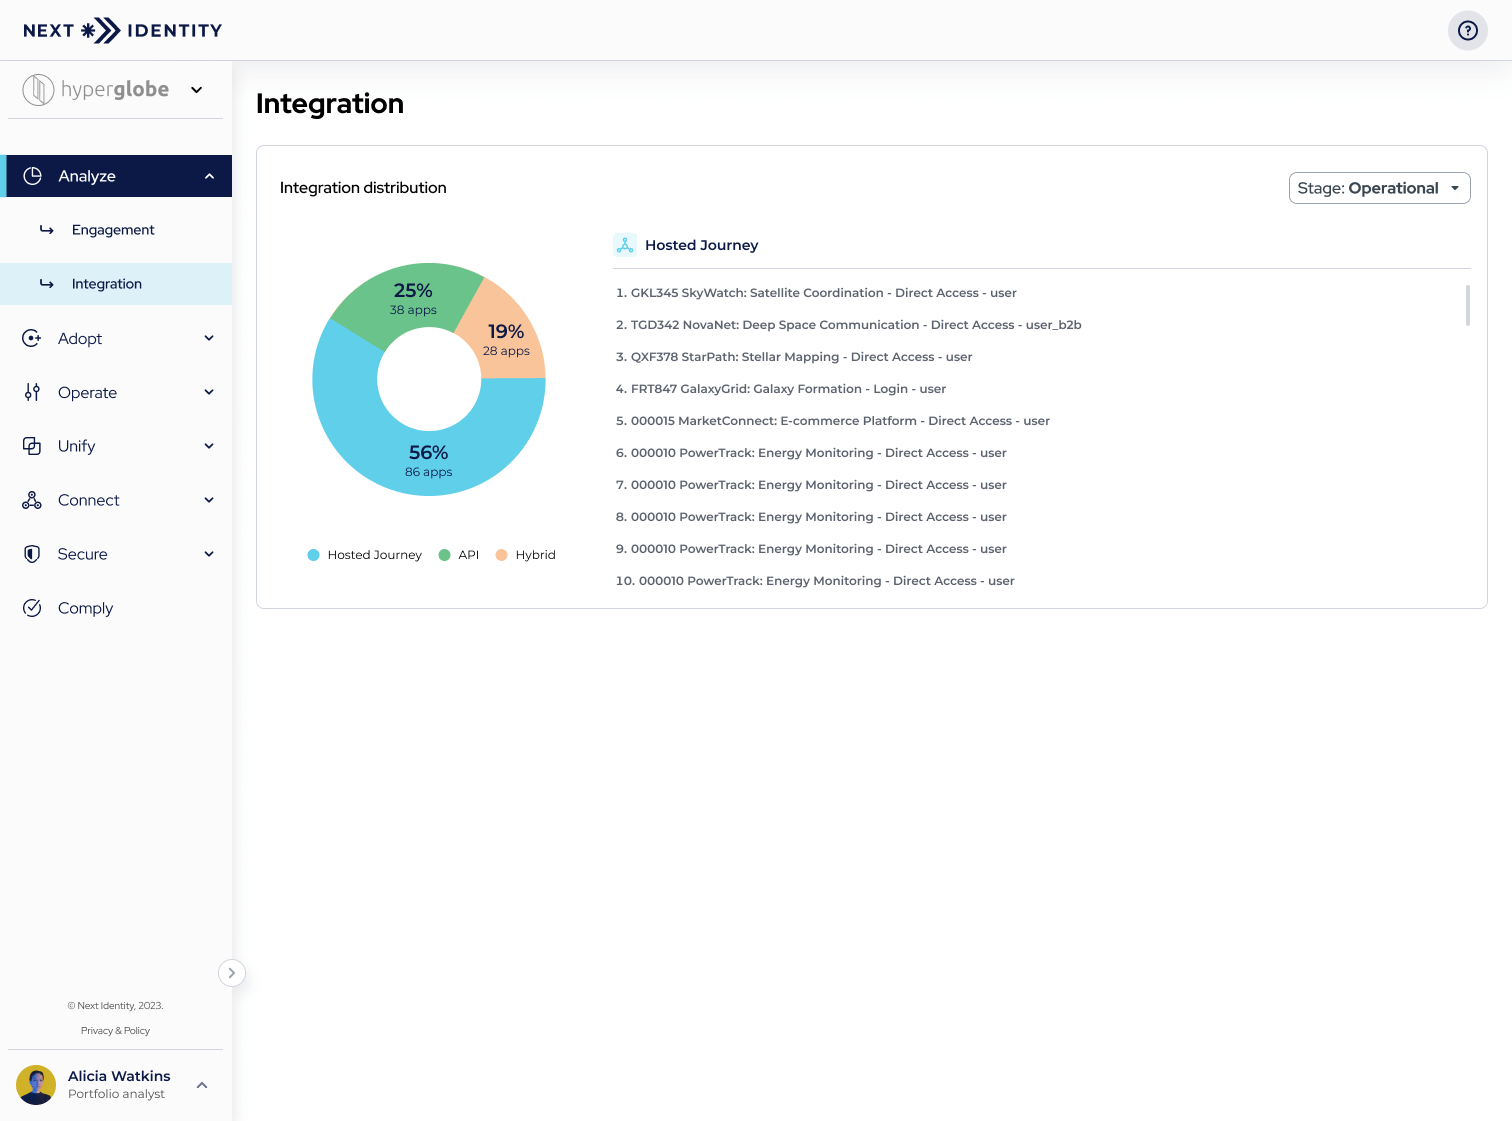 Overview on Next Identity Analyze - Integration Page